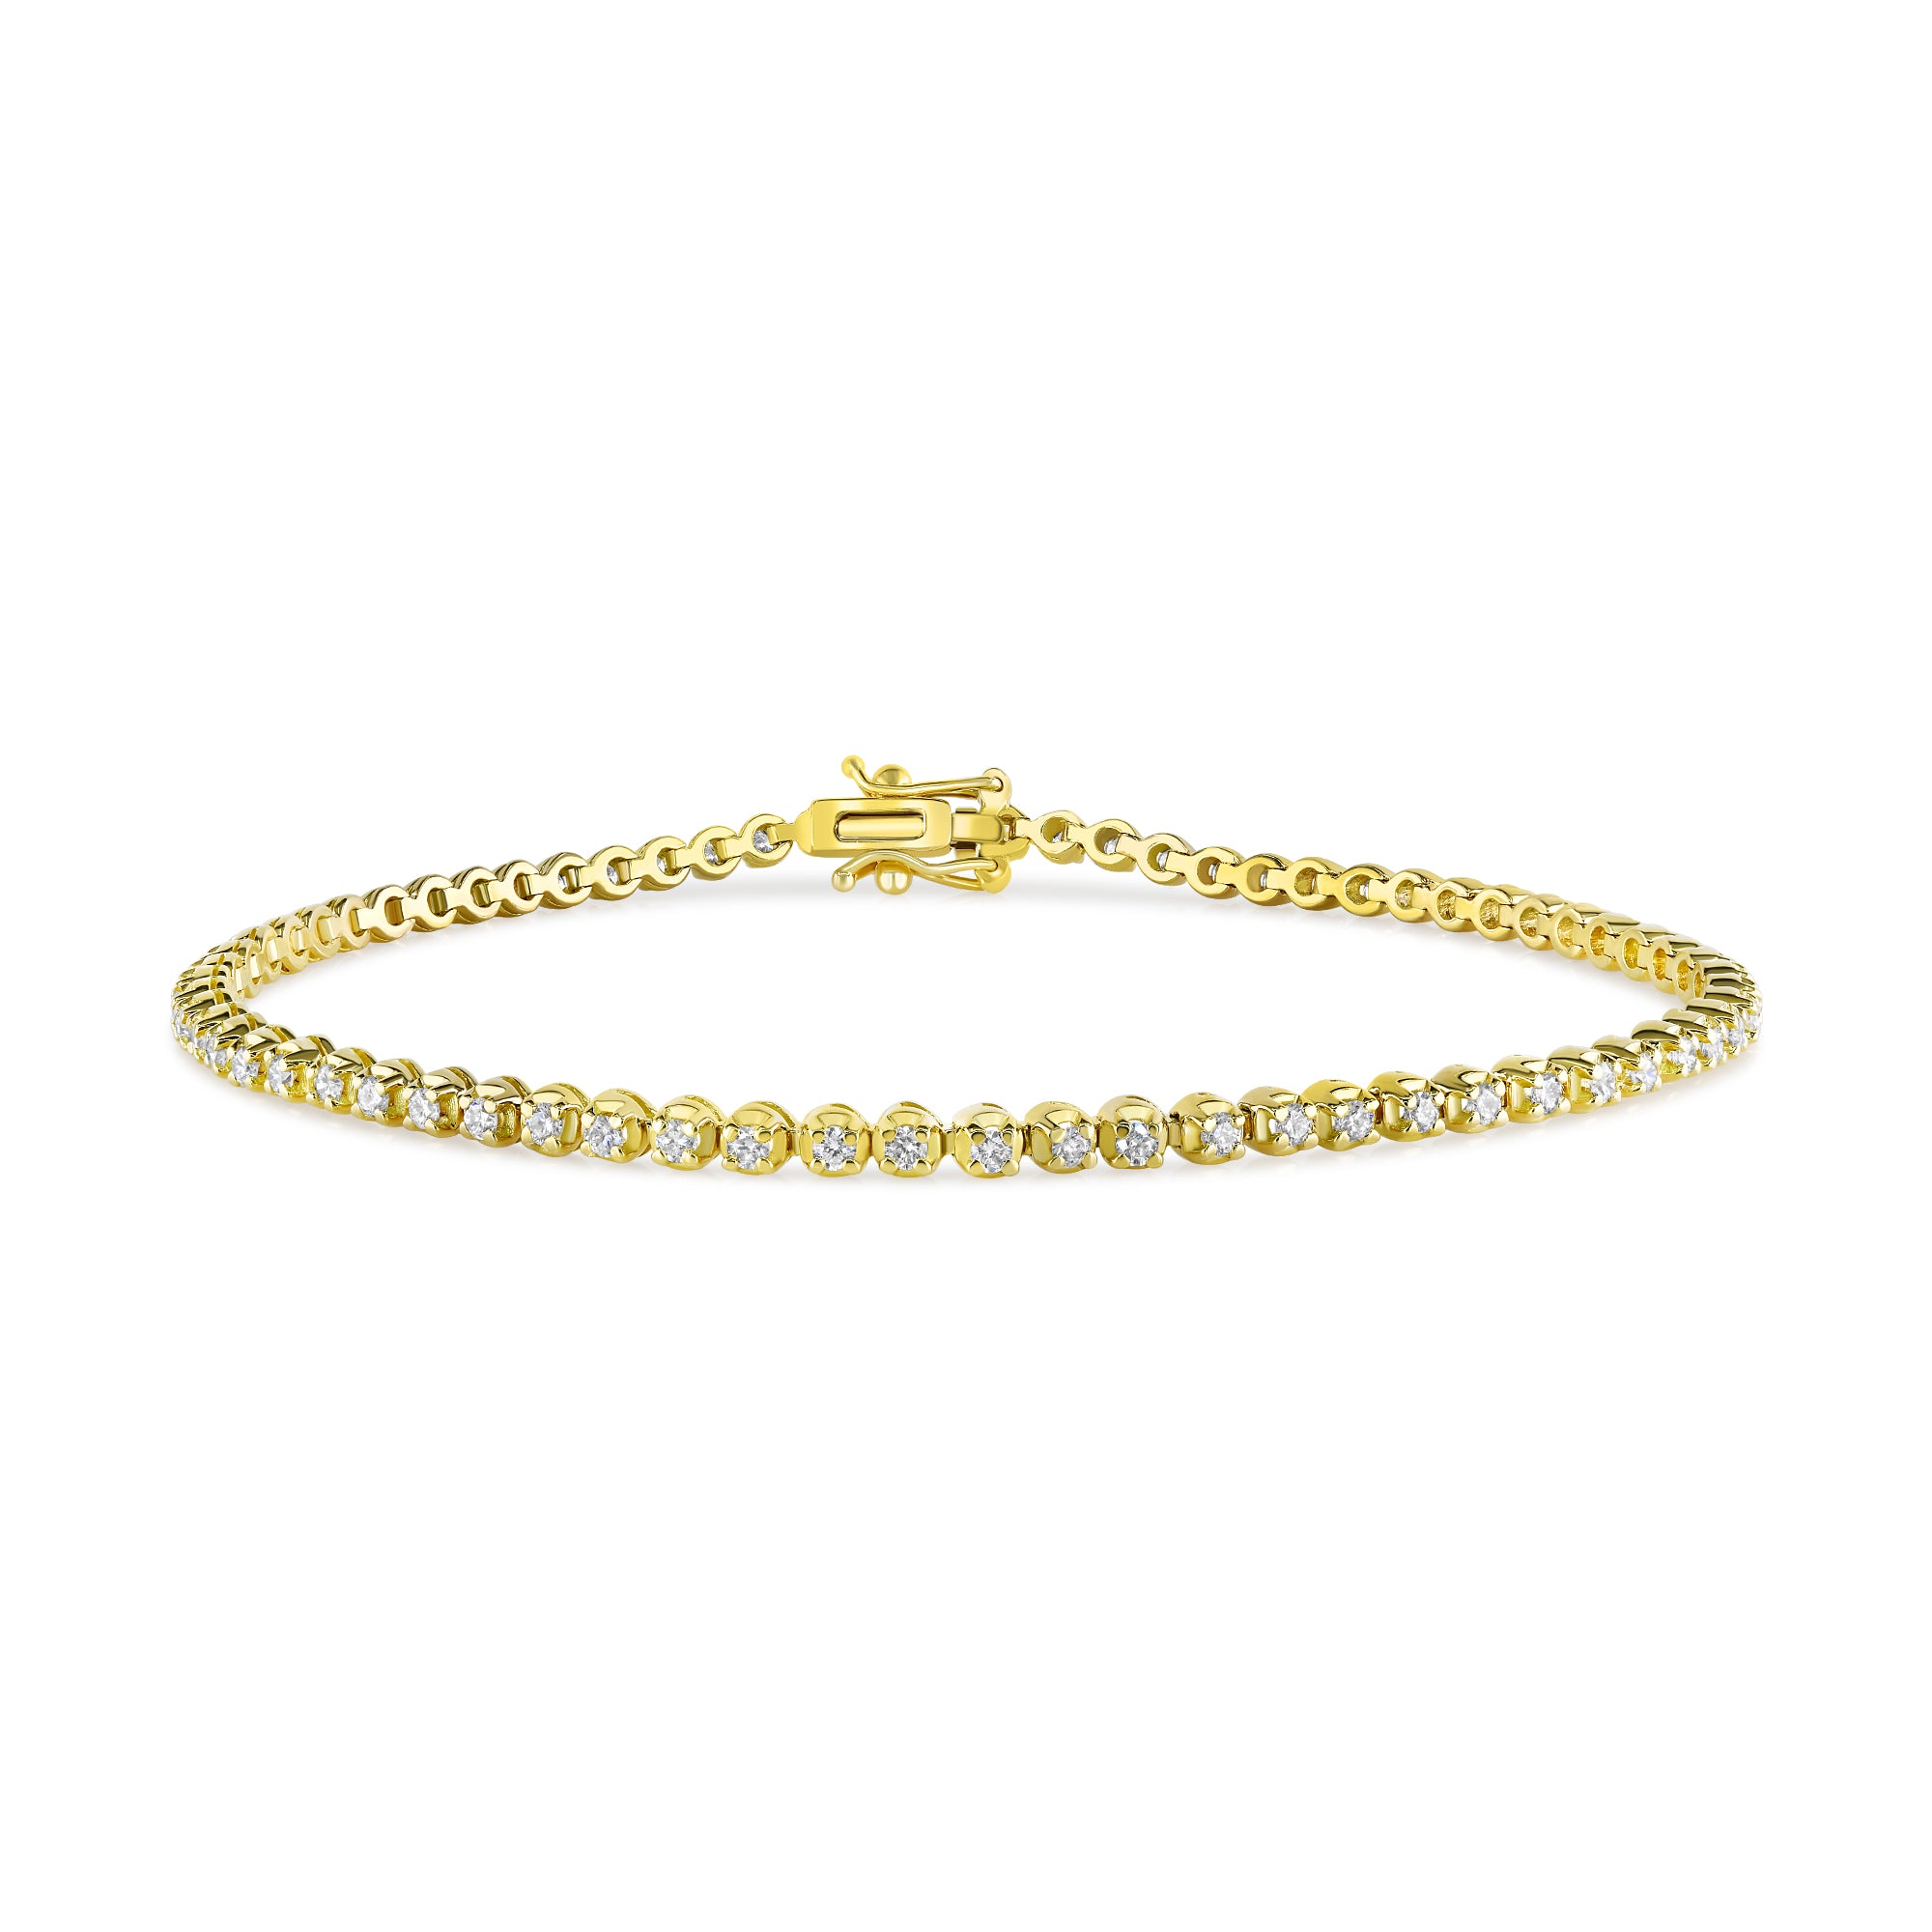 3.03ct round diamond tennis bracelet set in 18ct yellow gold